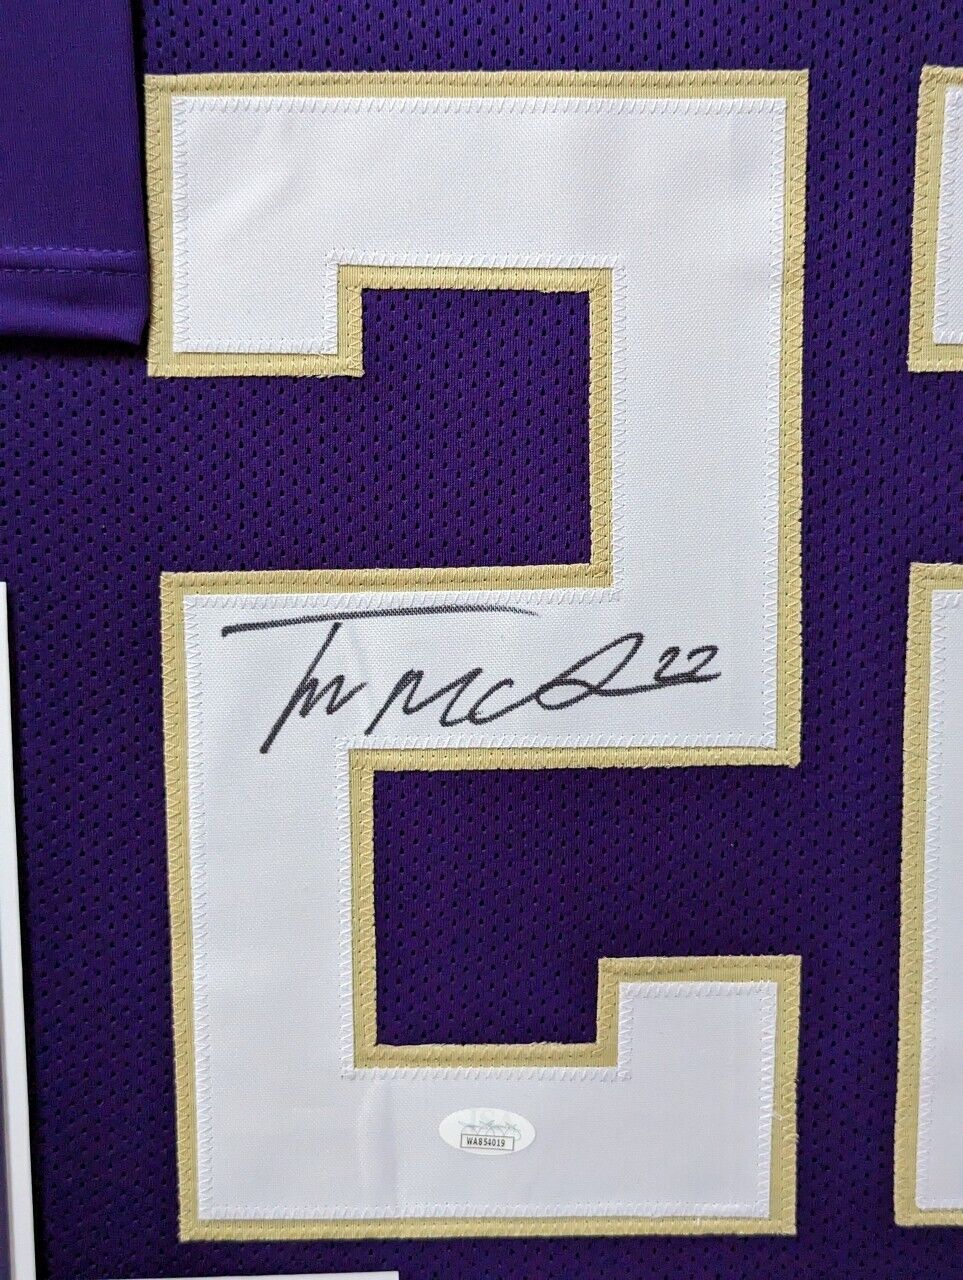 MVP Authentics Framed Washington Huskies Trent Mcduffie Autographed Signed Jersey Jsa Coa 427.50 sports jersey framing , jersey framing